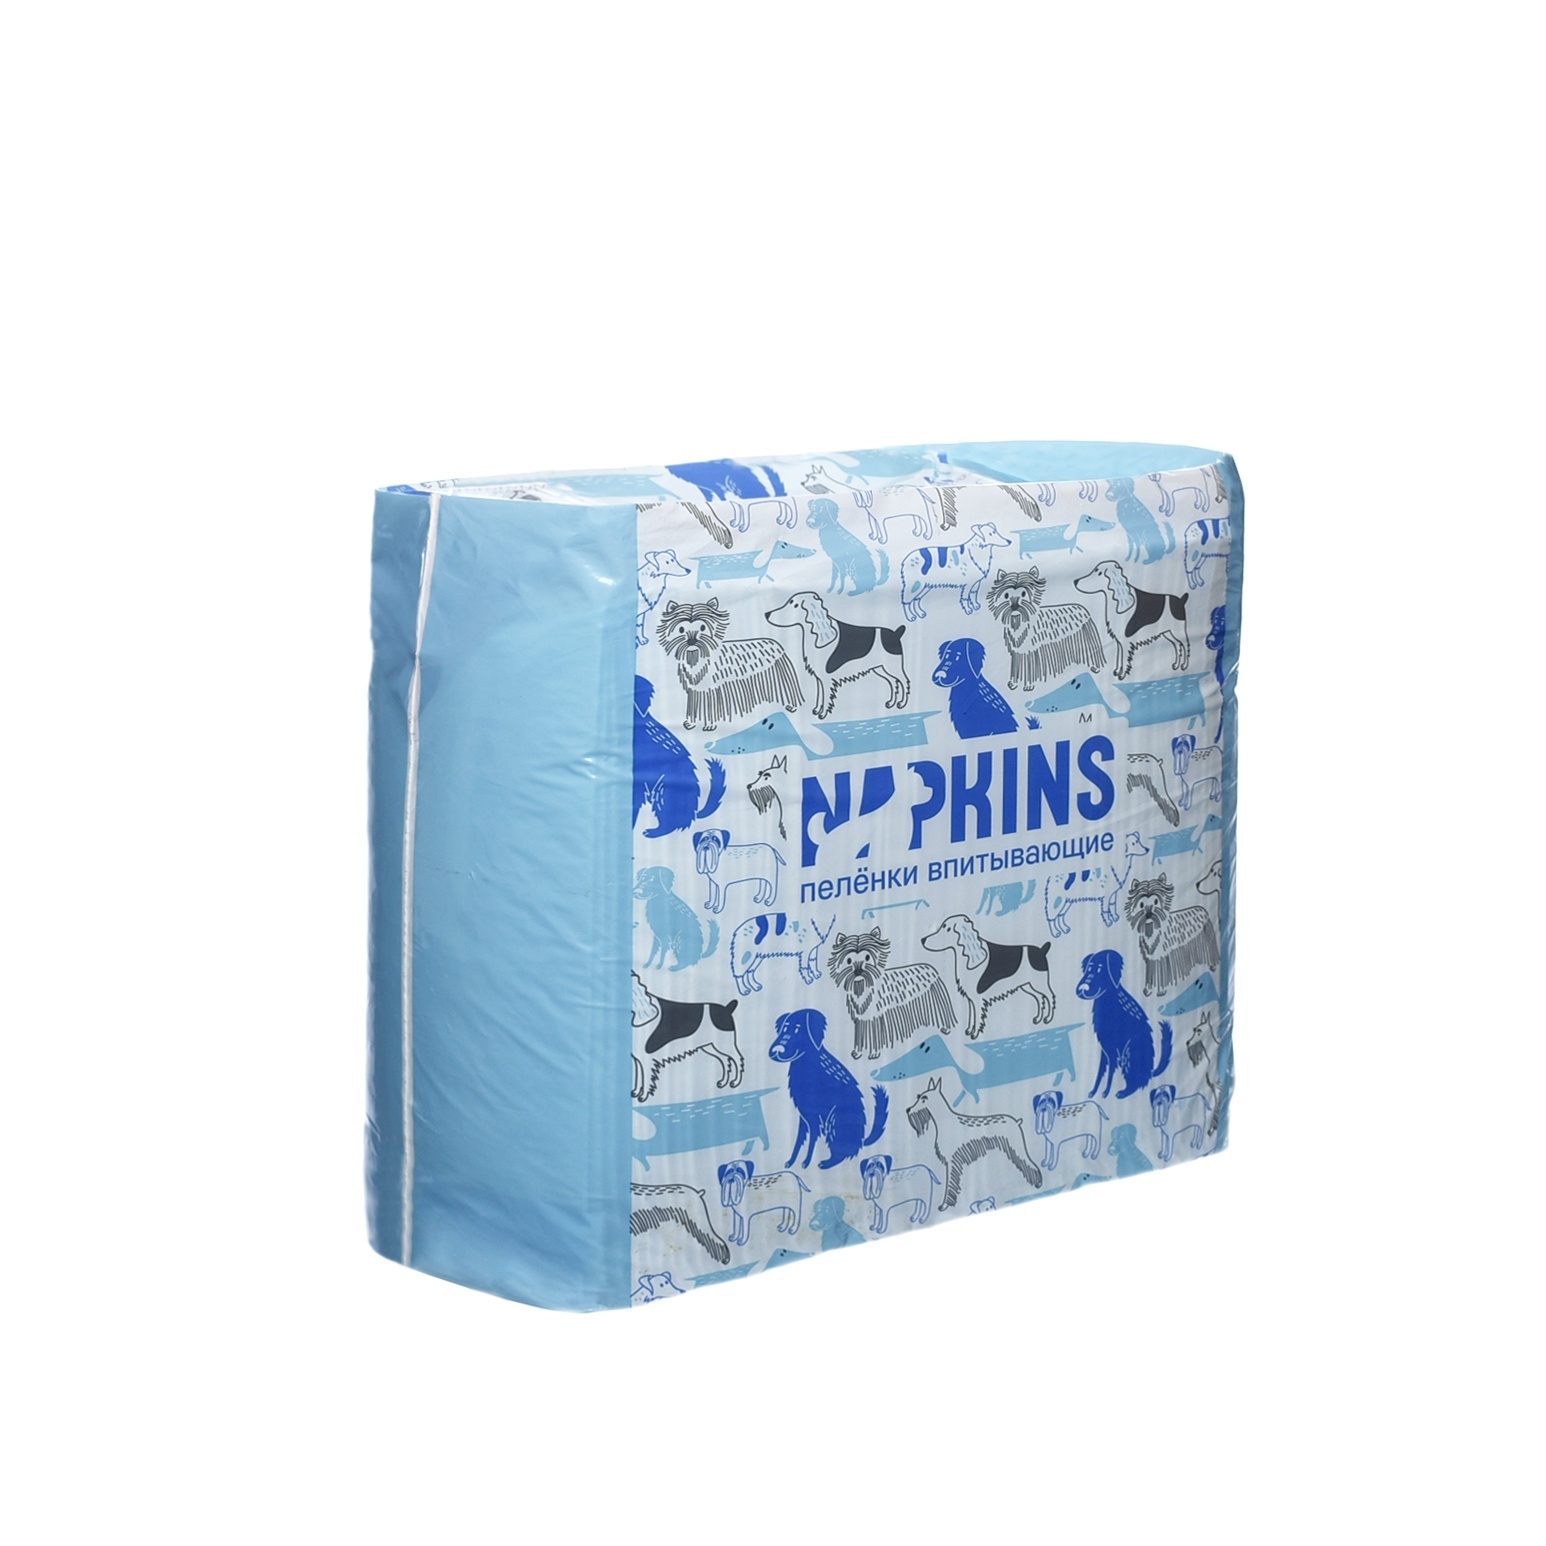 NAPKINS NAPKINS гелевые пелёнки для собак 60х40 (300 г) napkins napkins гелевые пелёнки для собак 60х60 300 г